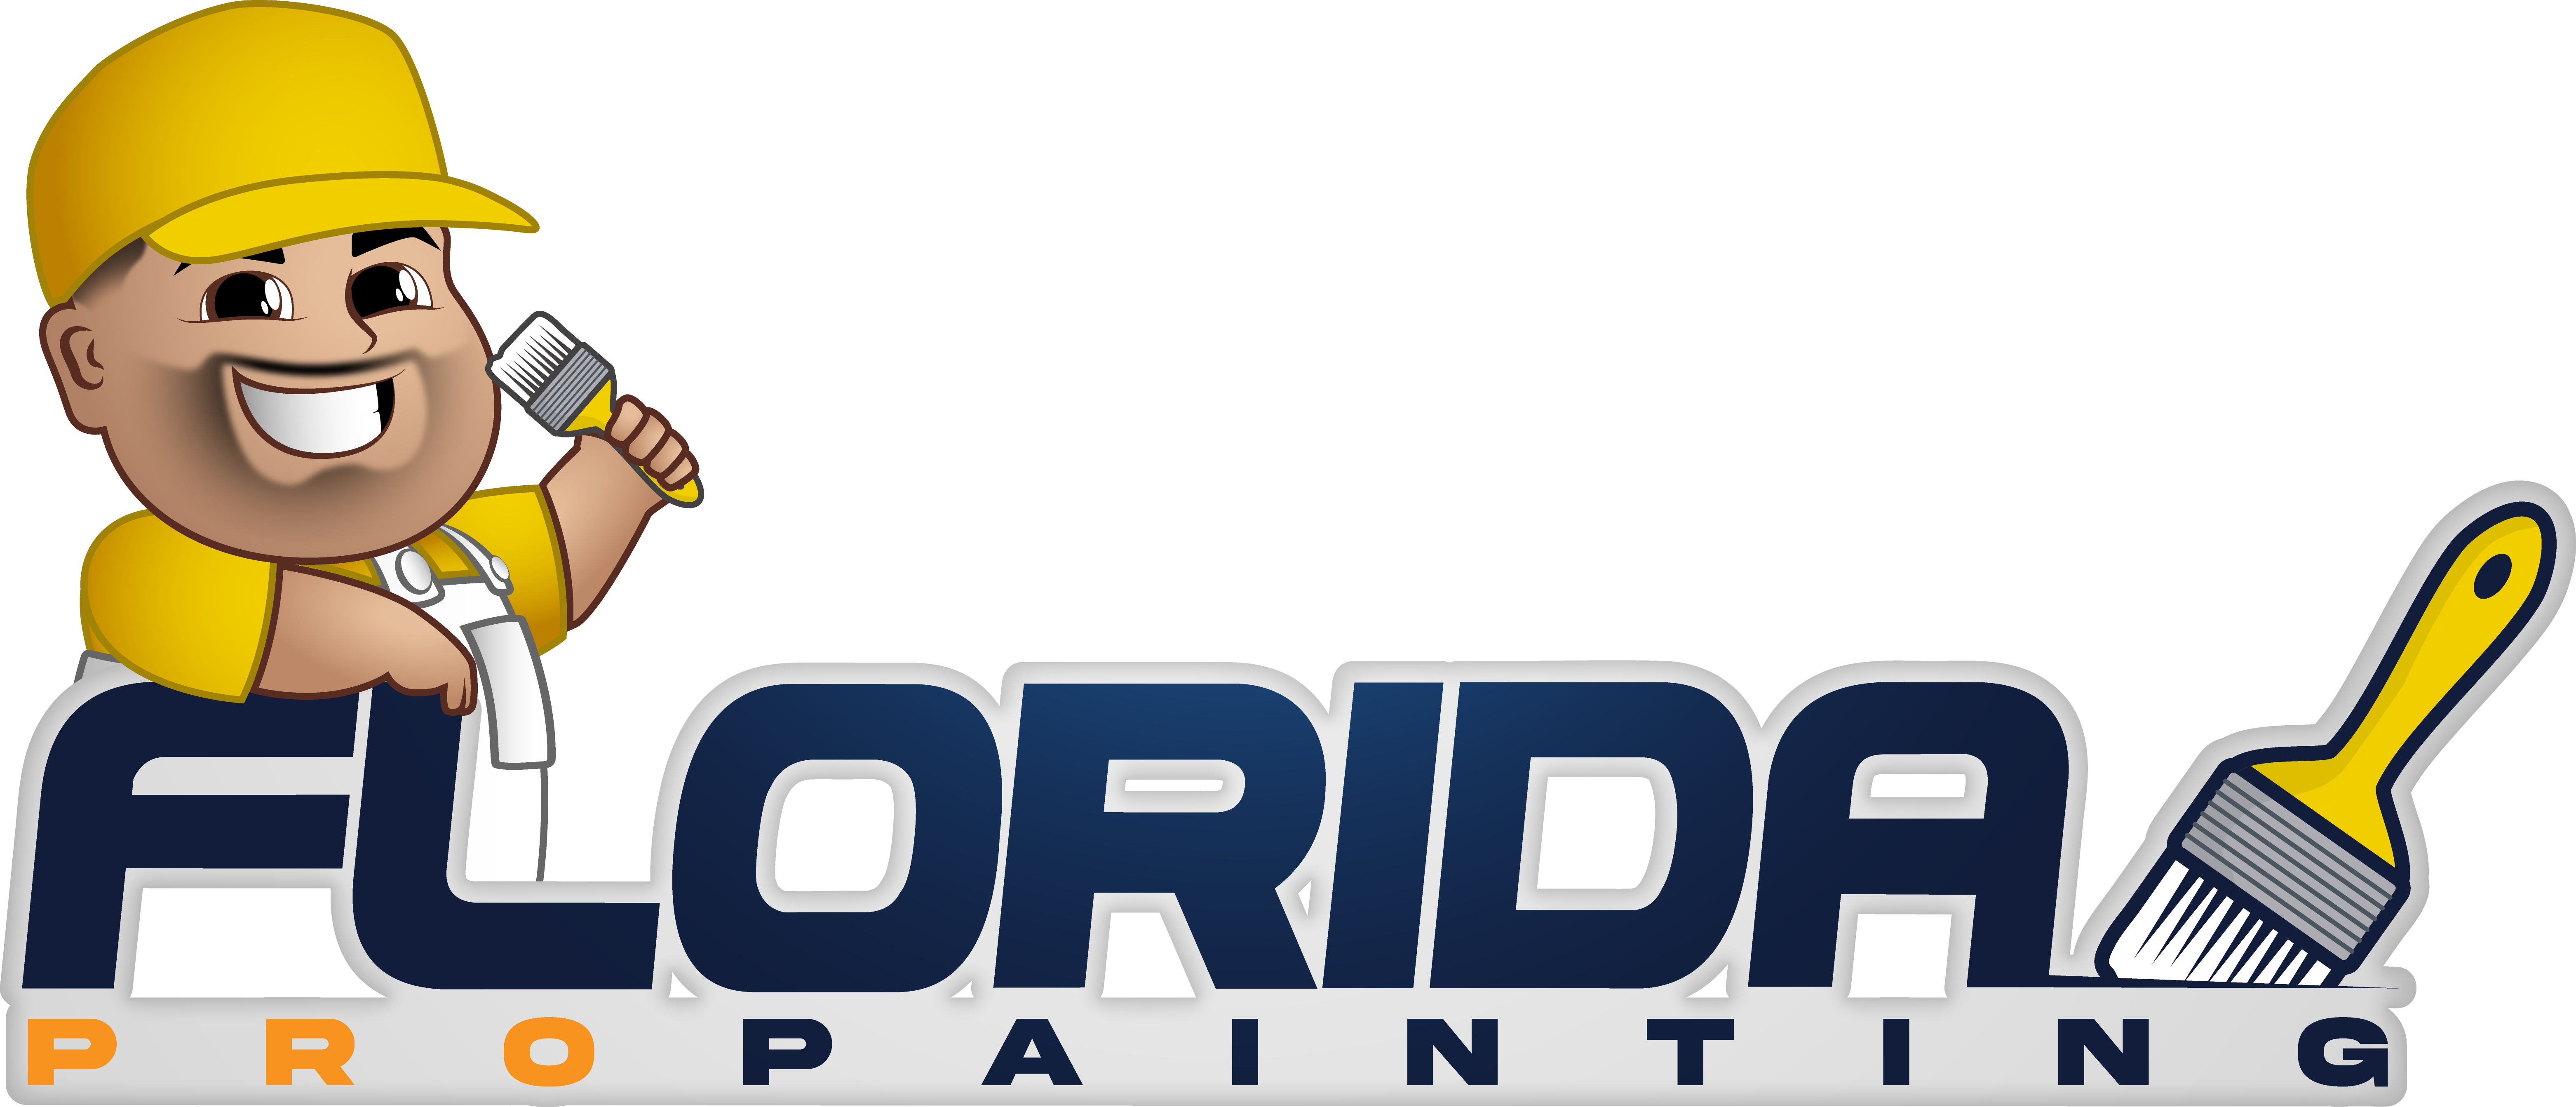 Flavia Painting LLC dba Florida Propainting Logo